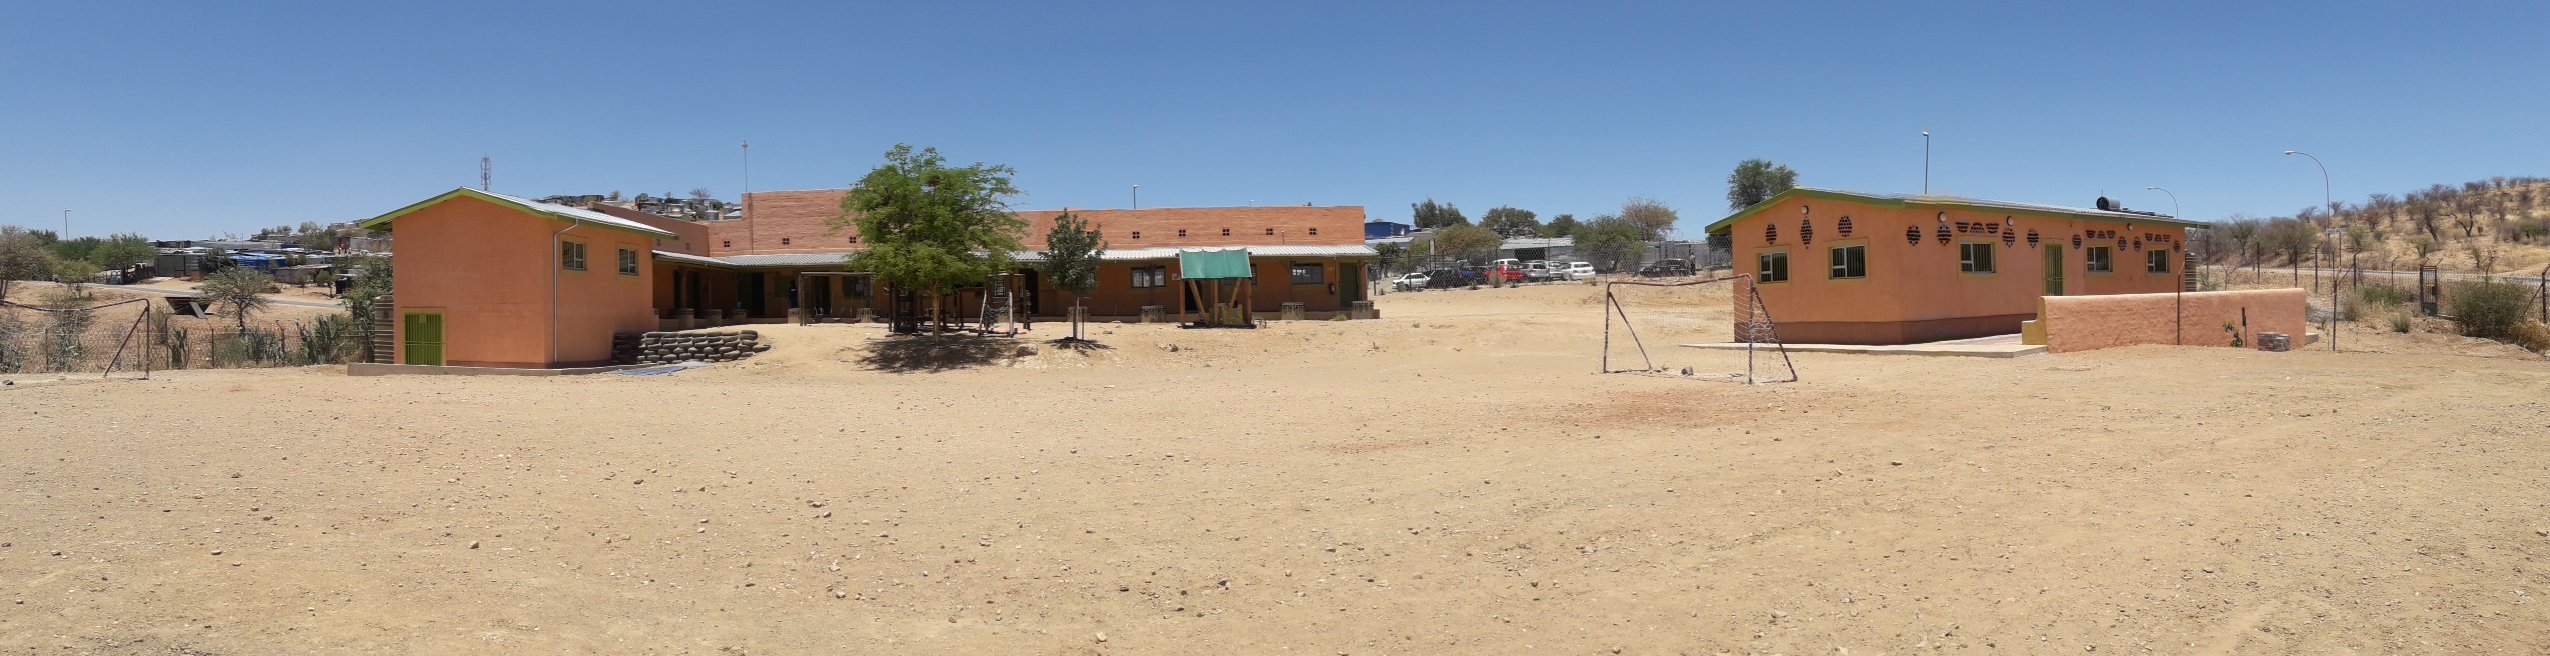 Kinderhilfsprojekt Mammadu - Namibia